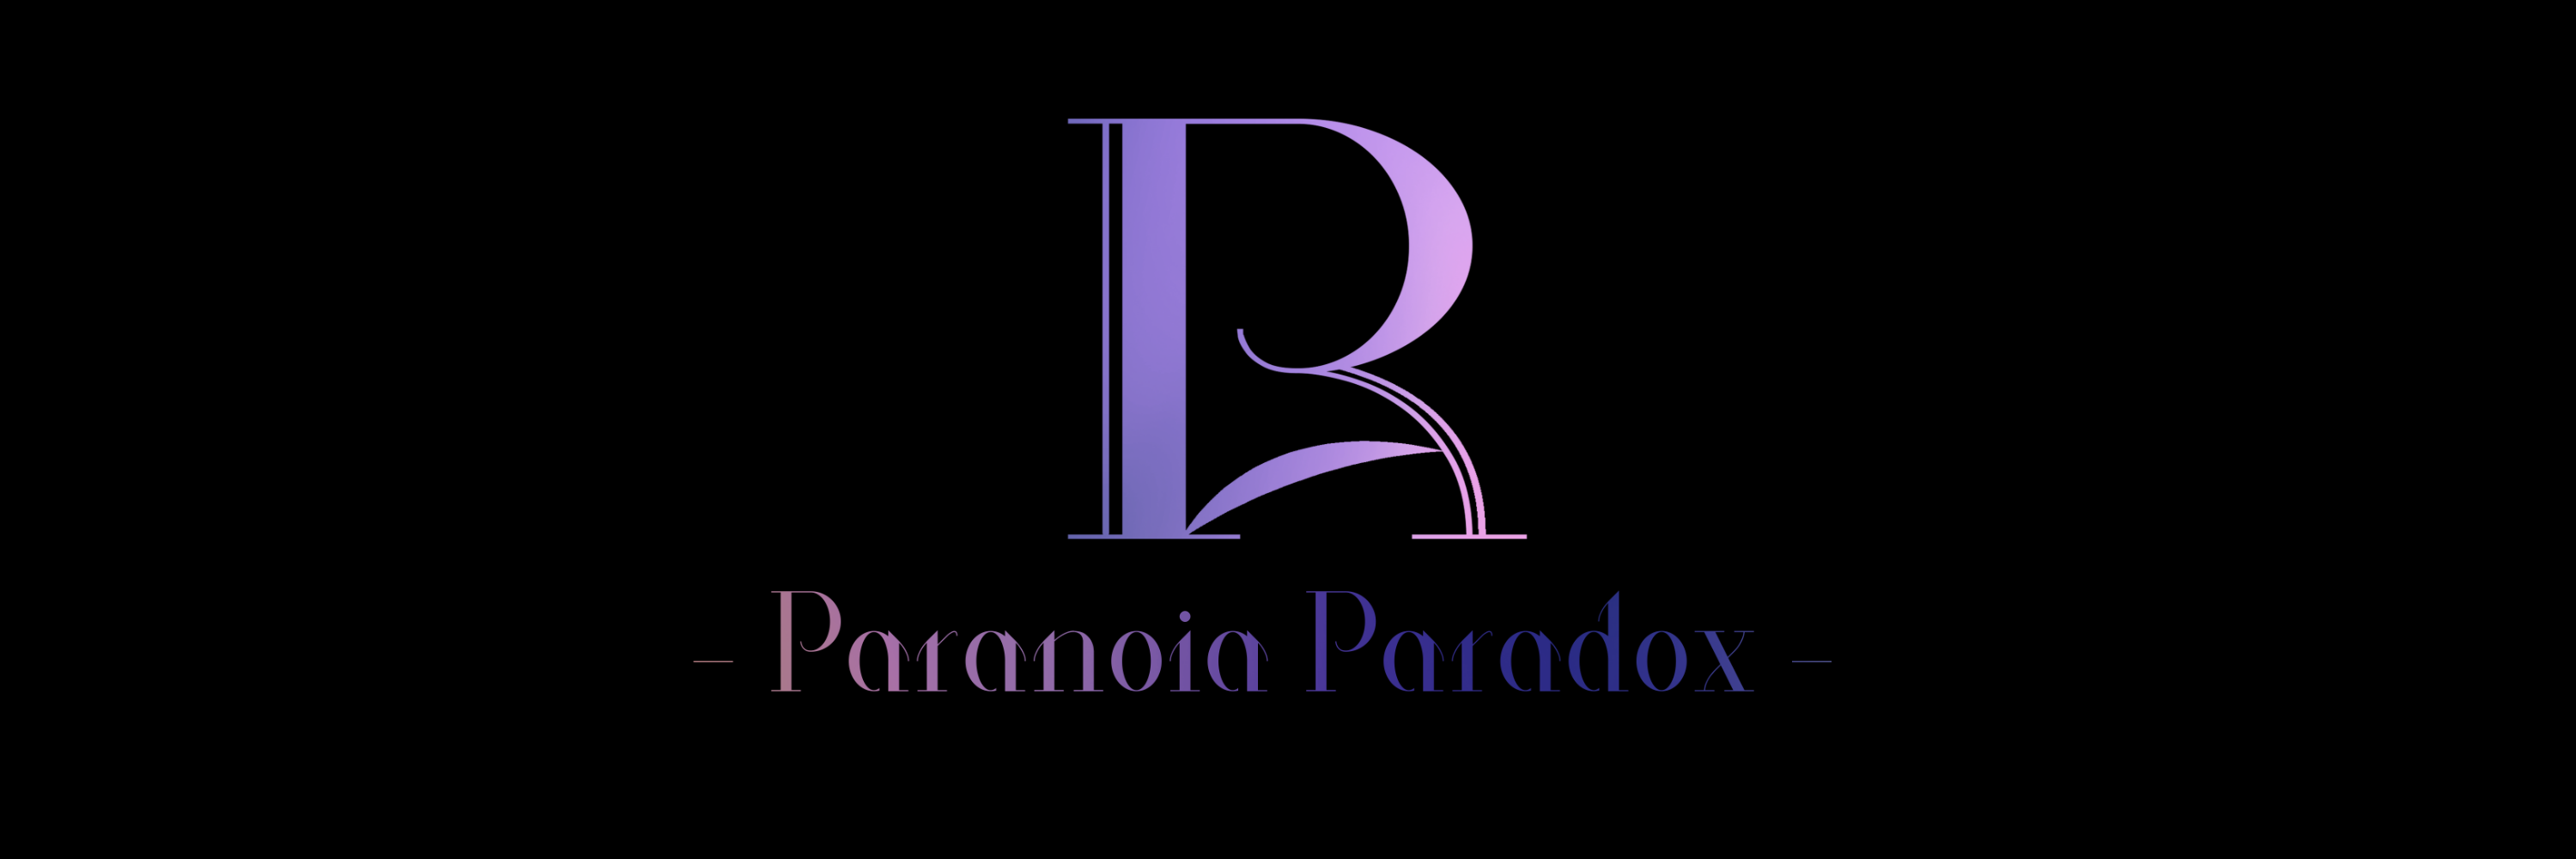 Paranoia-Paradox